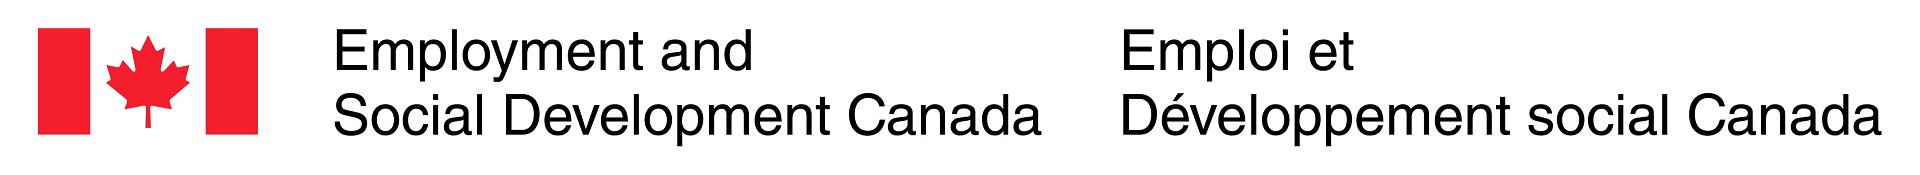 Employment and Social Development Canada Logo